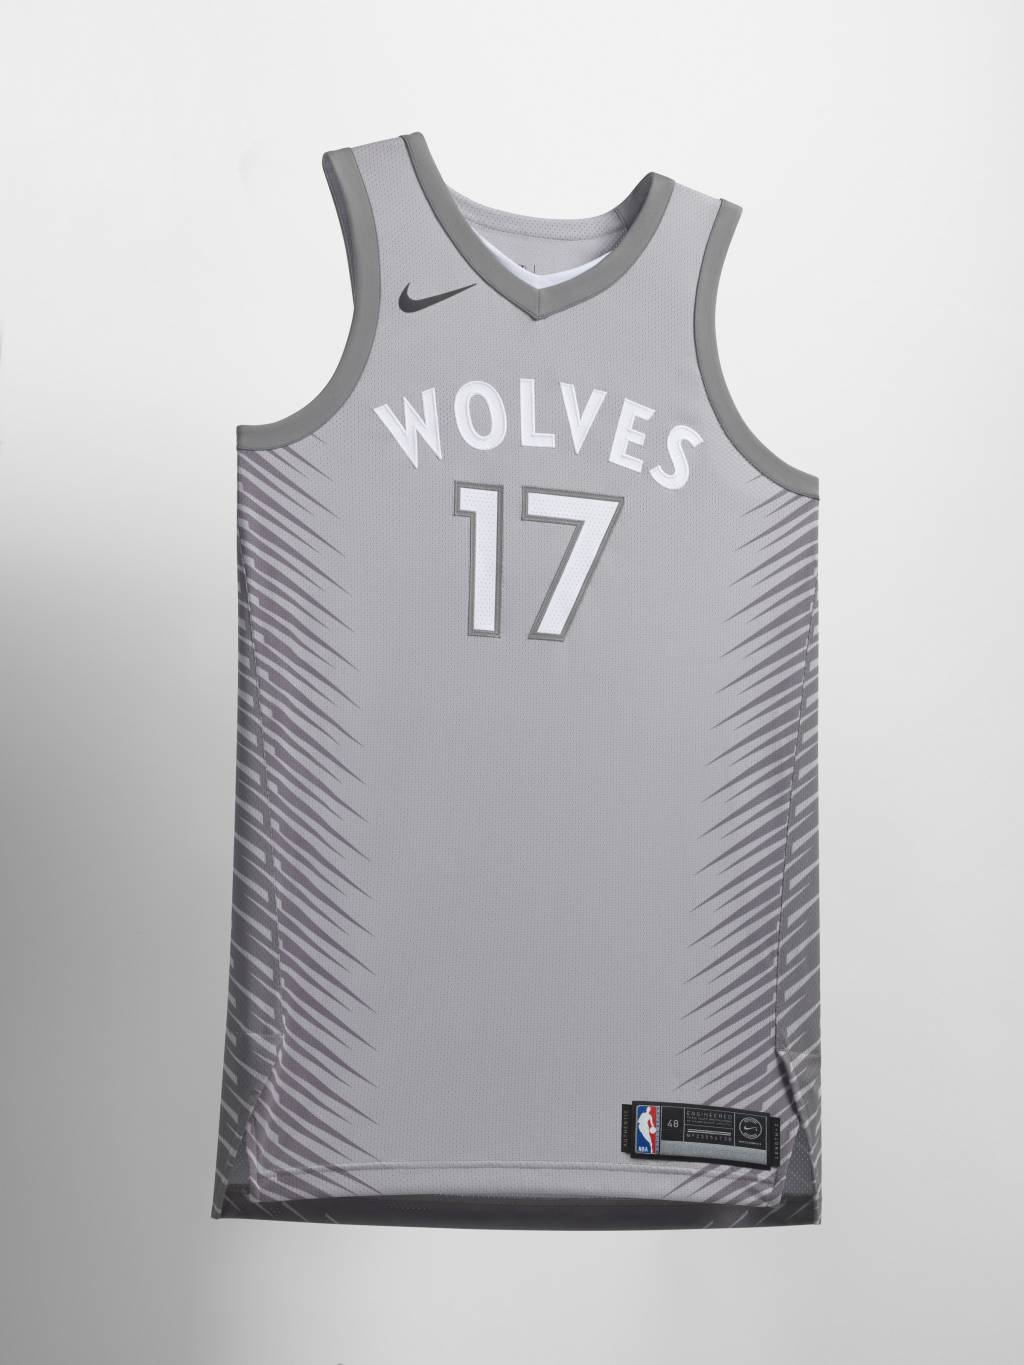 city edition timberwolves jersey